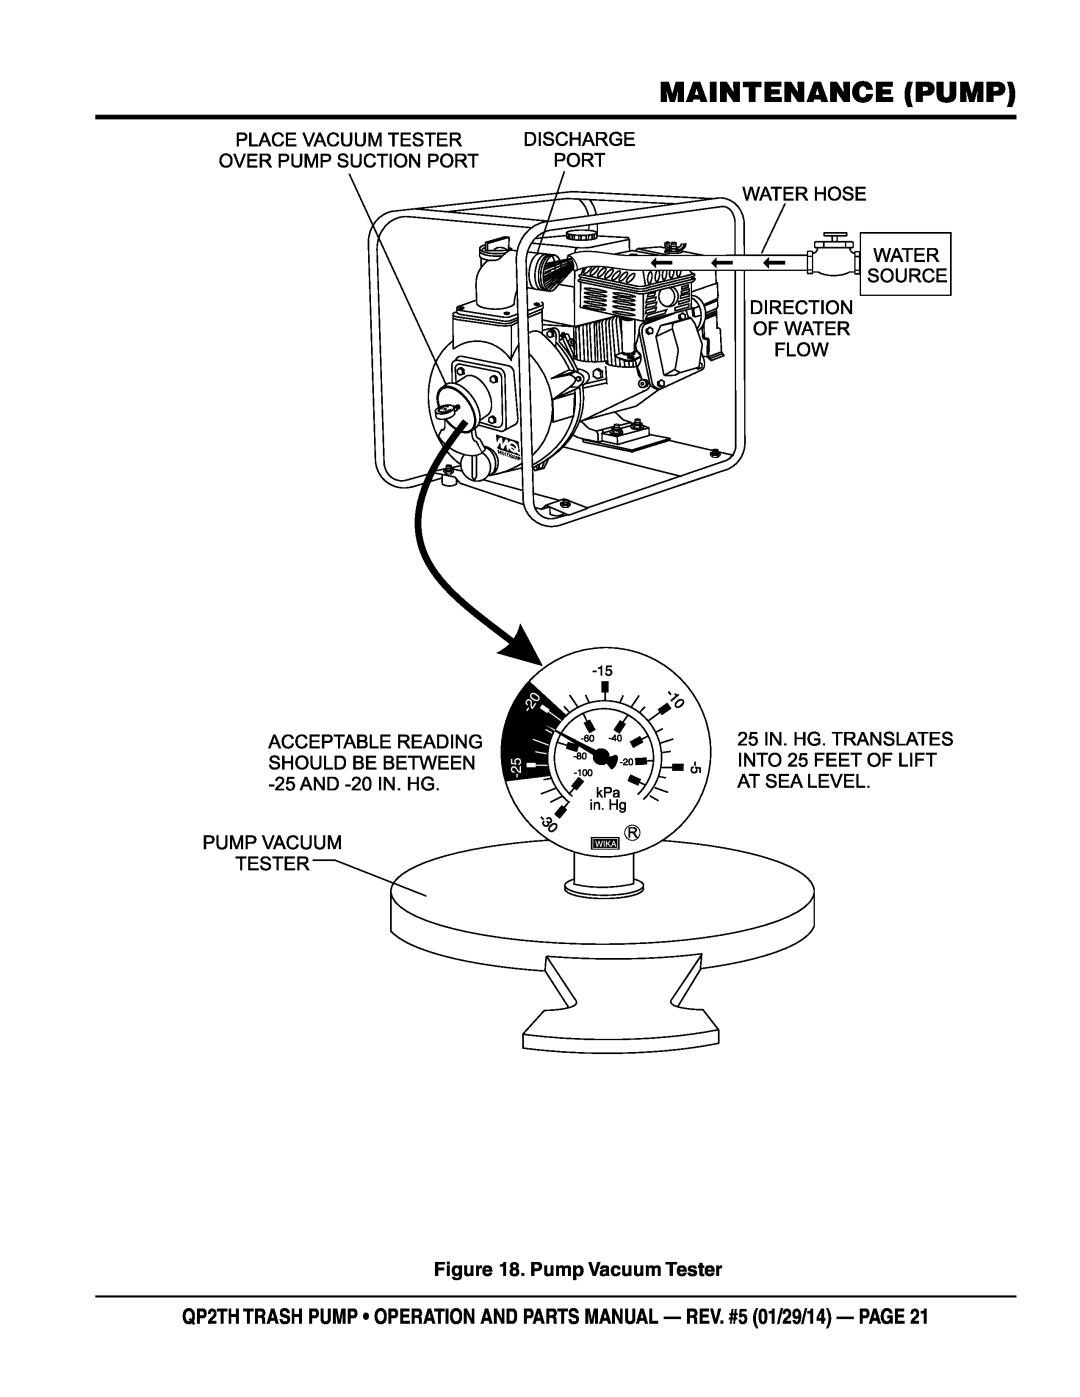 Multiquip QP2TH manual Maintenance Pump, Pump Vacuum Tester 